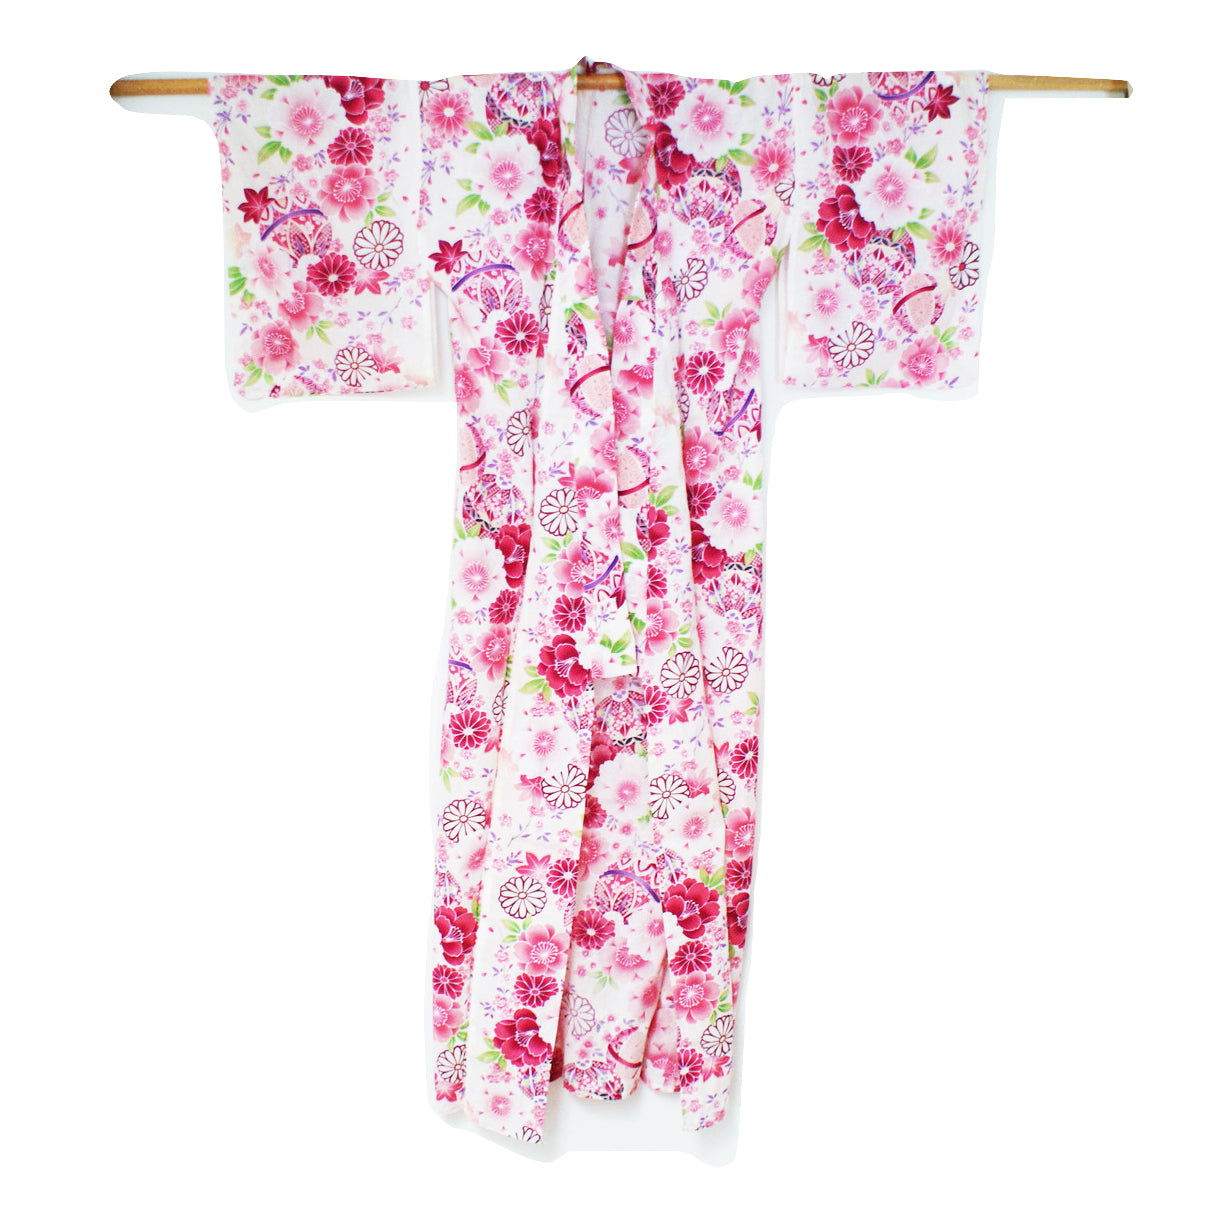 Yukata Kimono - Cherry Blossoms and Temari Balls Pink - Full